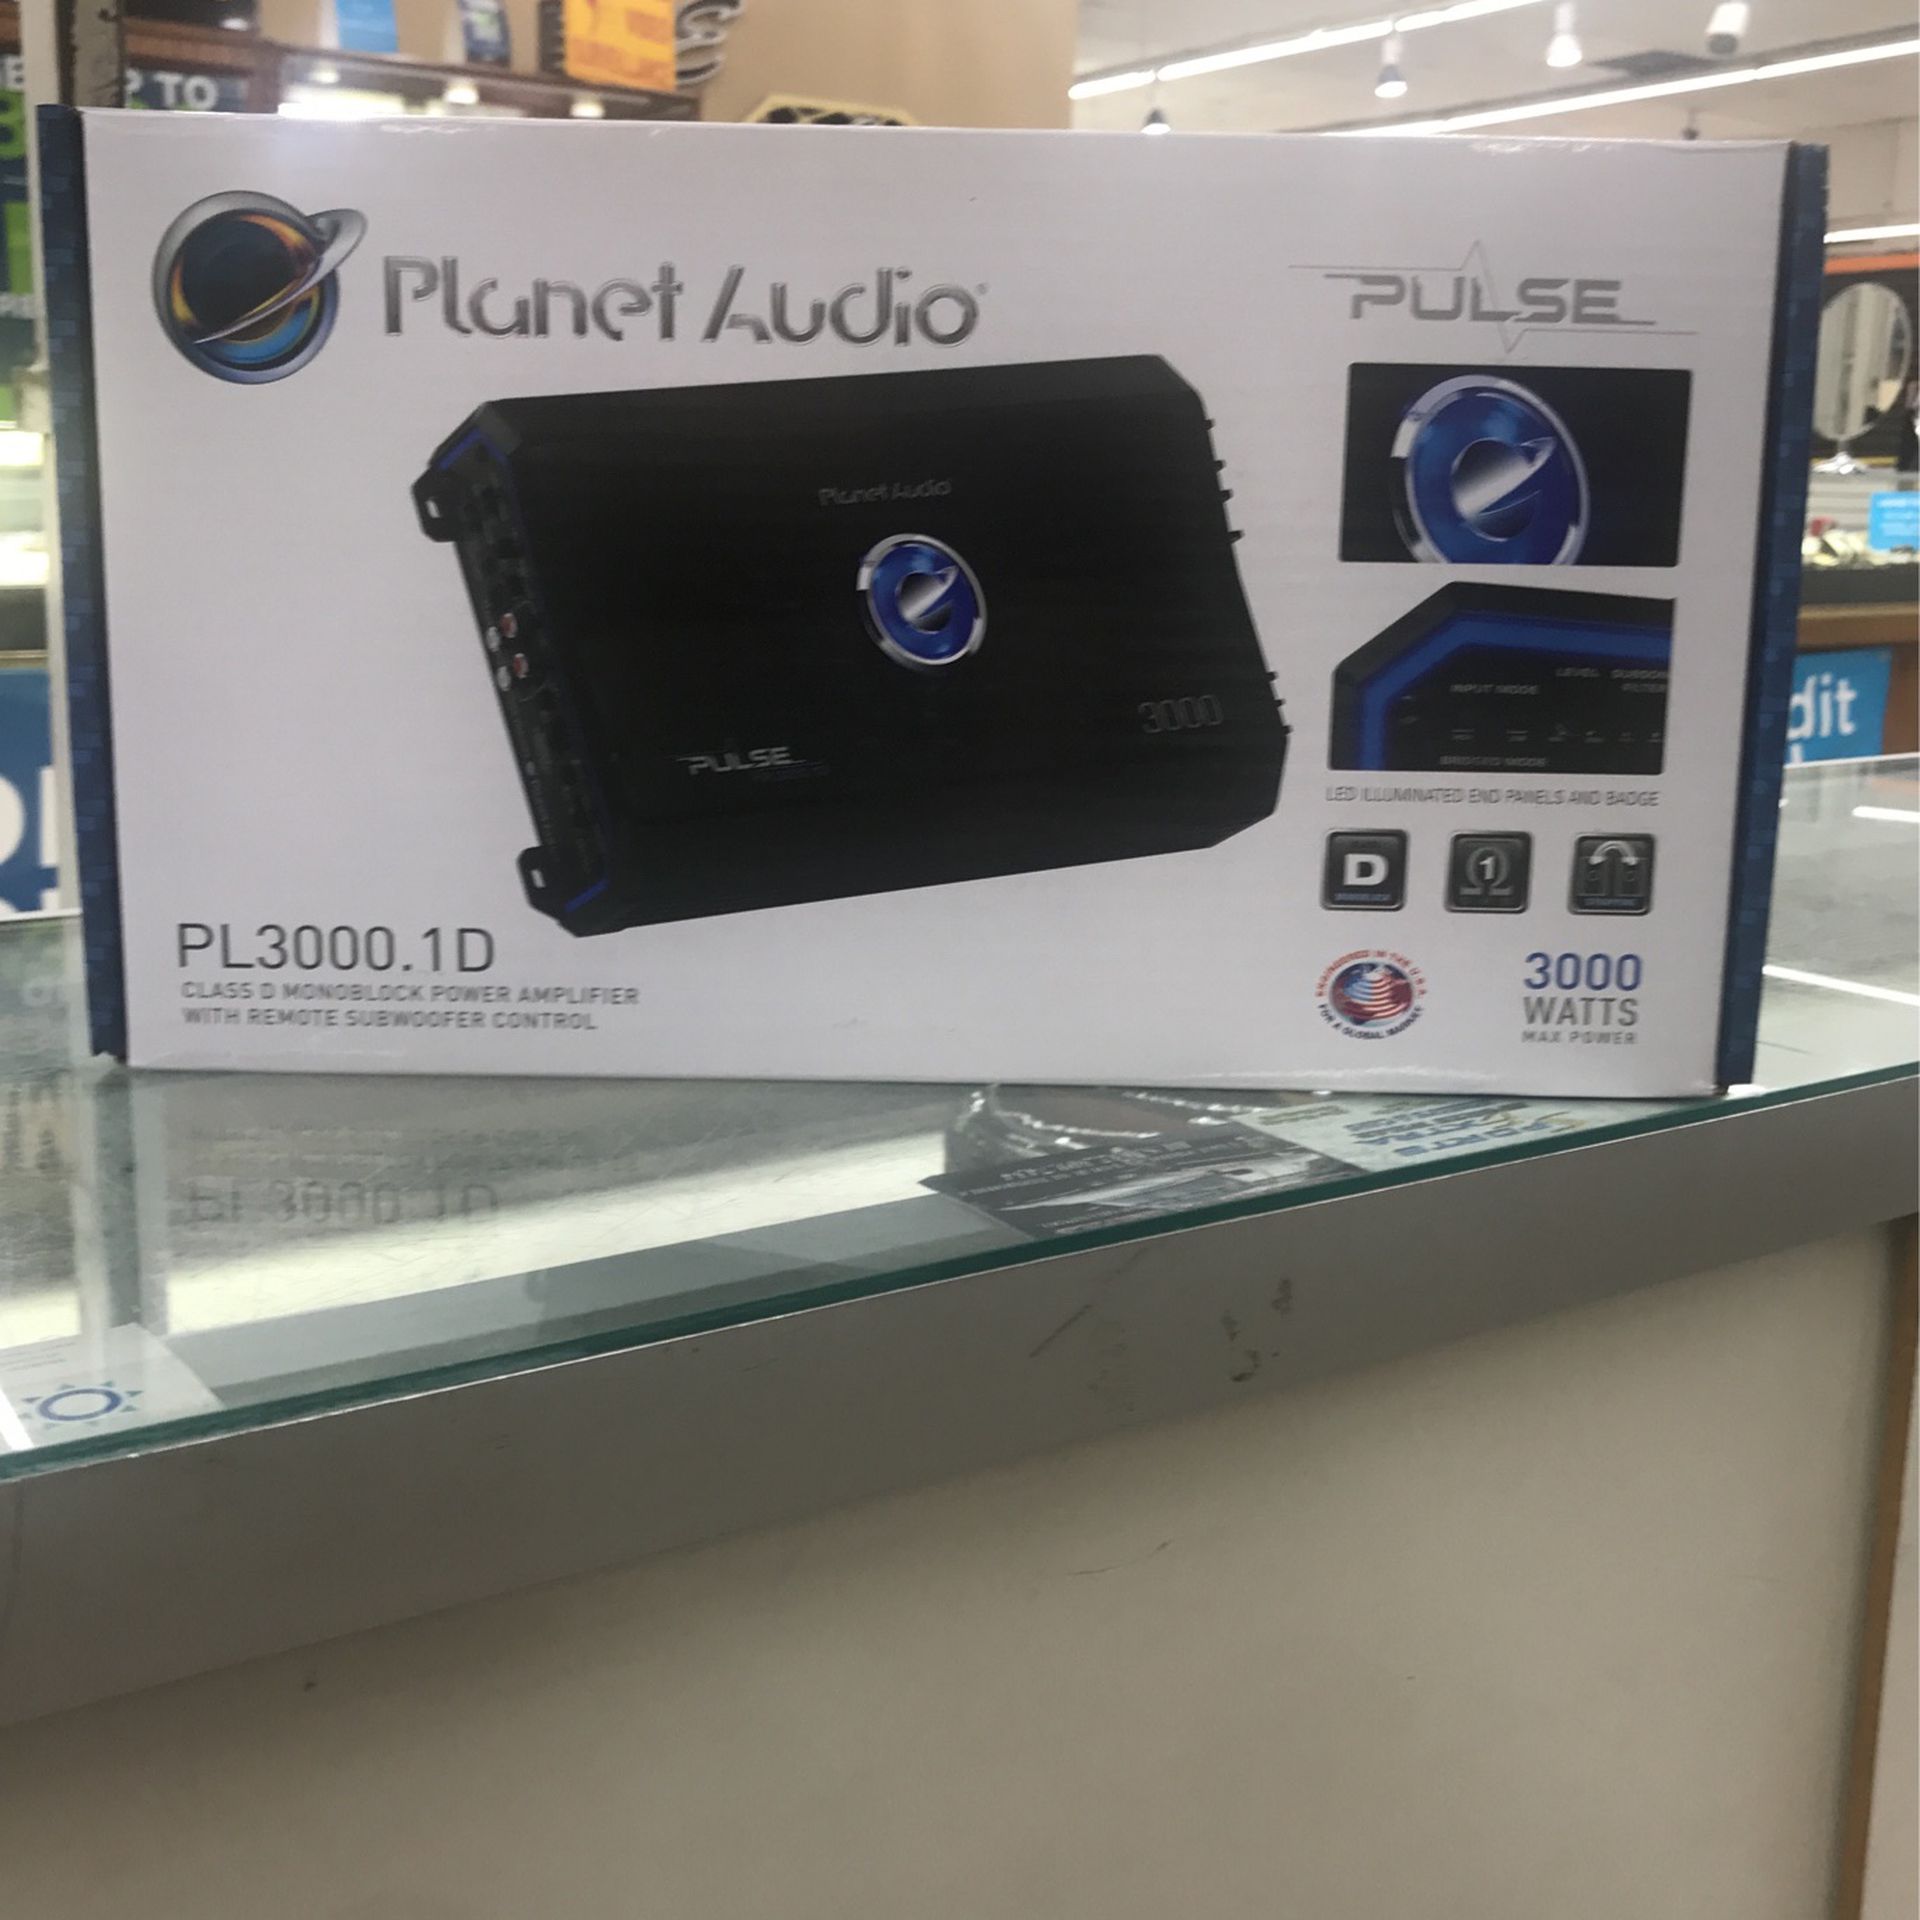 Planet Audio 3000 Watts Amp